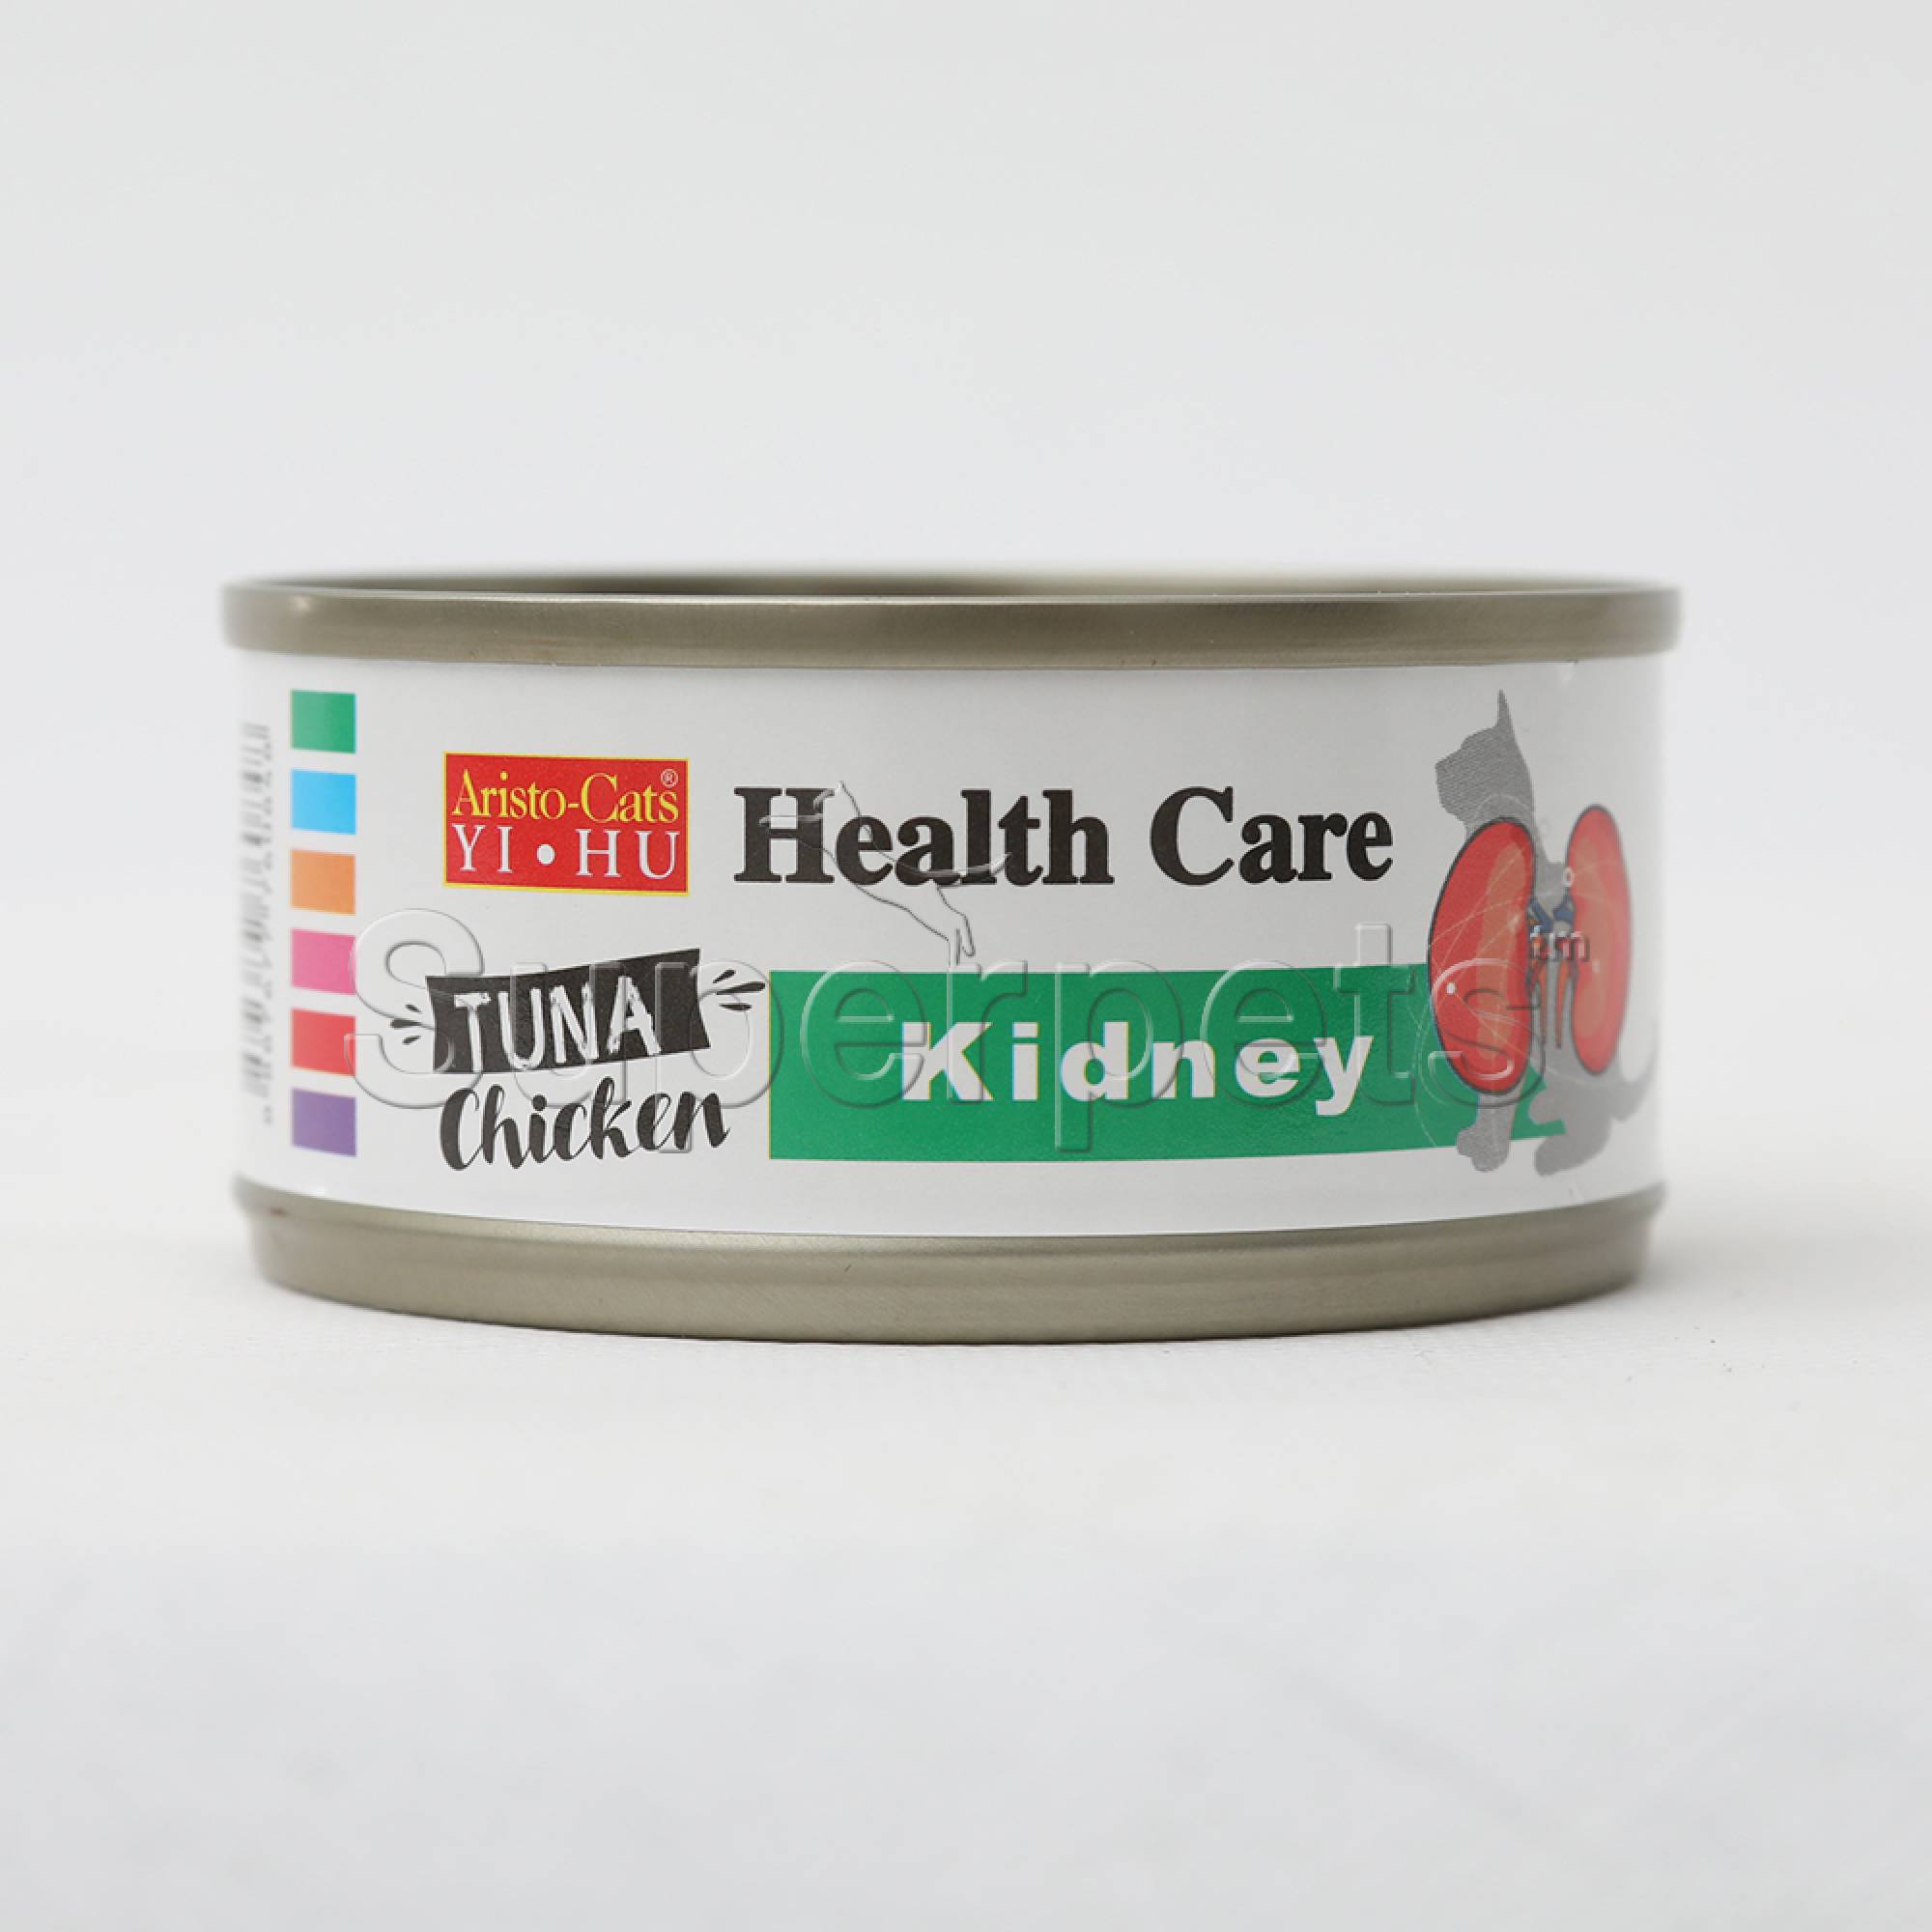 Aristo-Cats - CD131 Health Care Kidney 70g